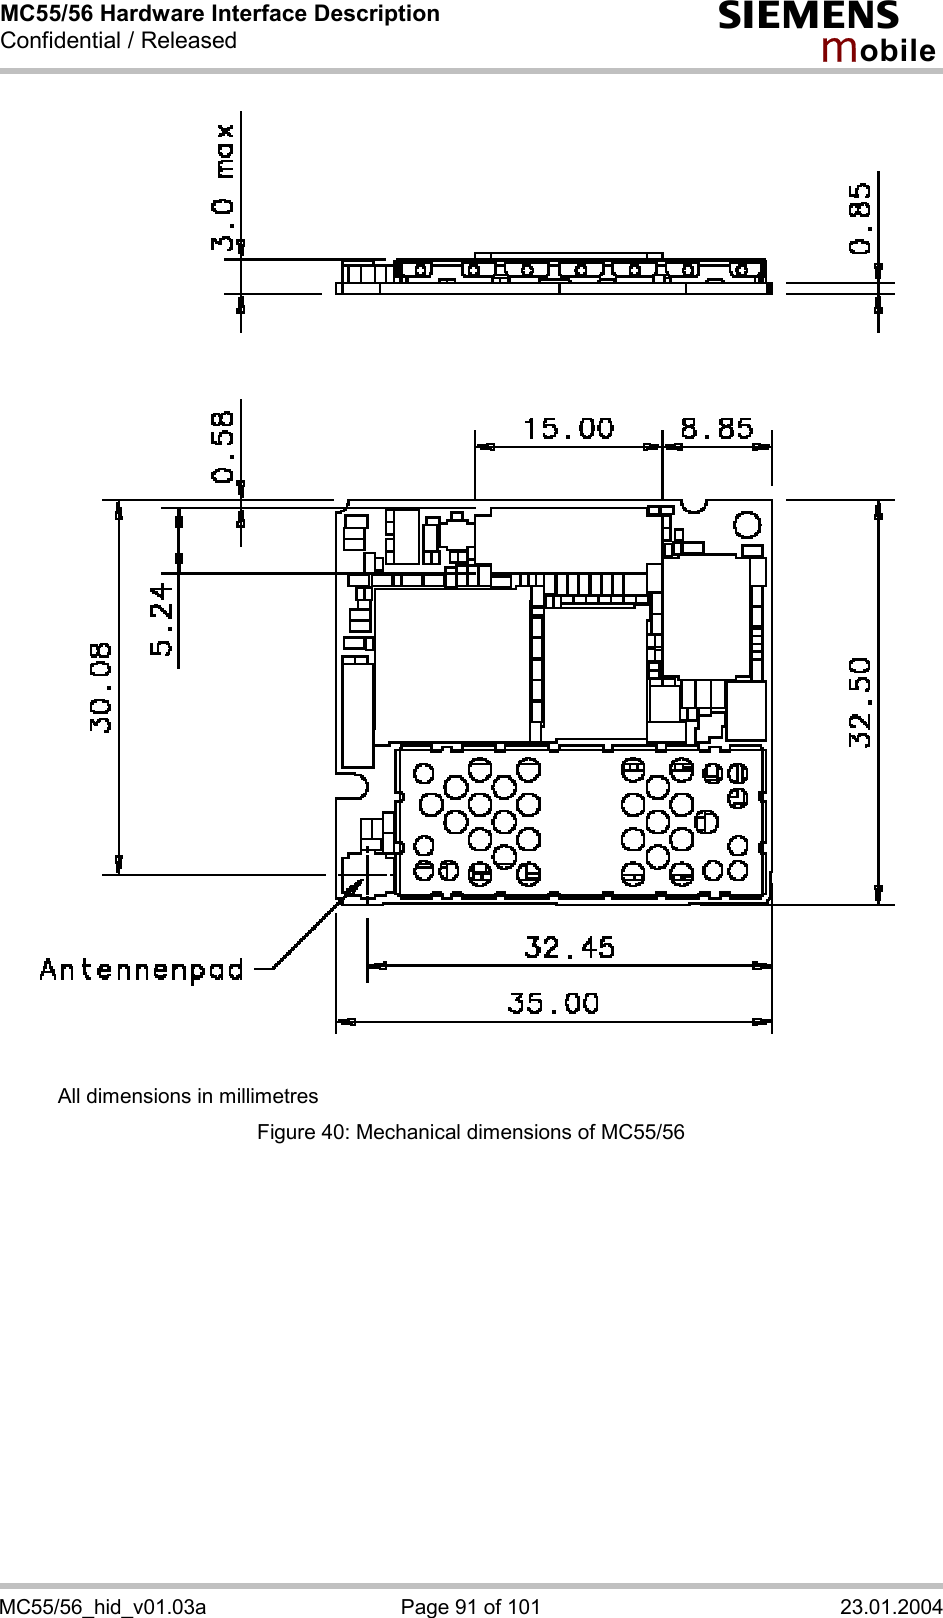 MC55/56 Hardware Interface Description Confidential / Released s mo b i l e MC55/56_hid_v01.03a  Page 91 of 101  23.01.2004       All dimensions in millimetres Figure 40: Mechanical dimensions of MC55/56  